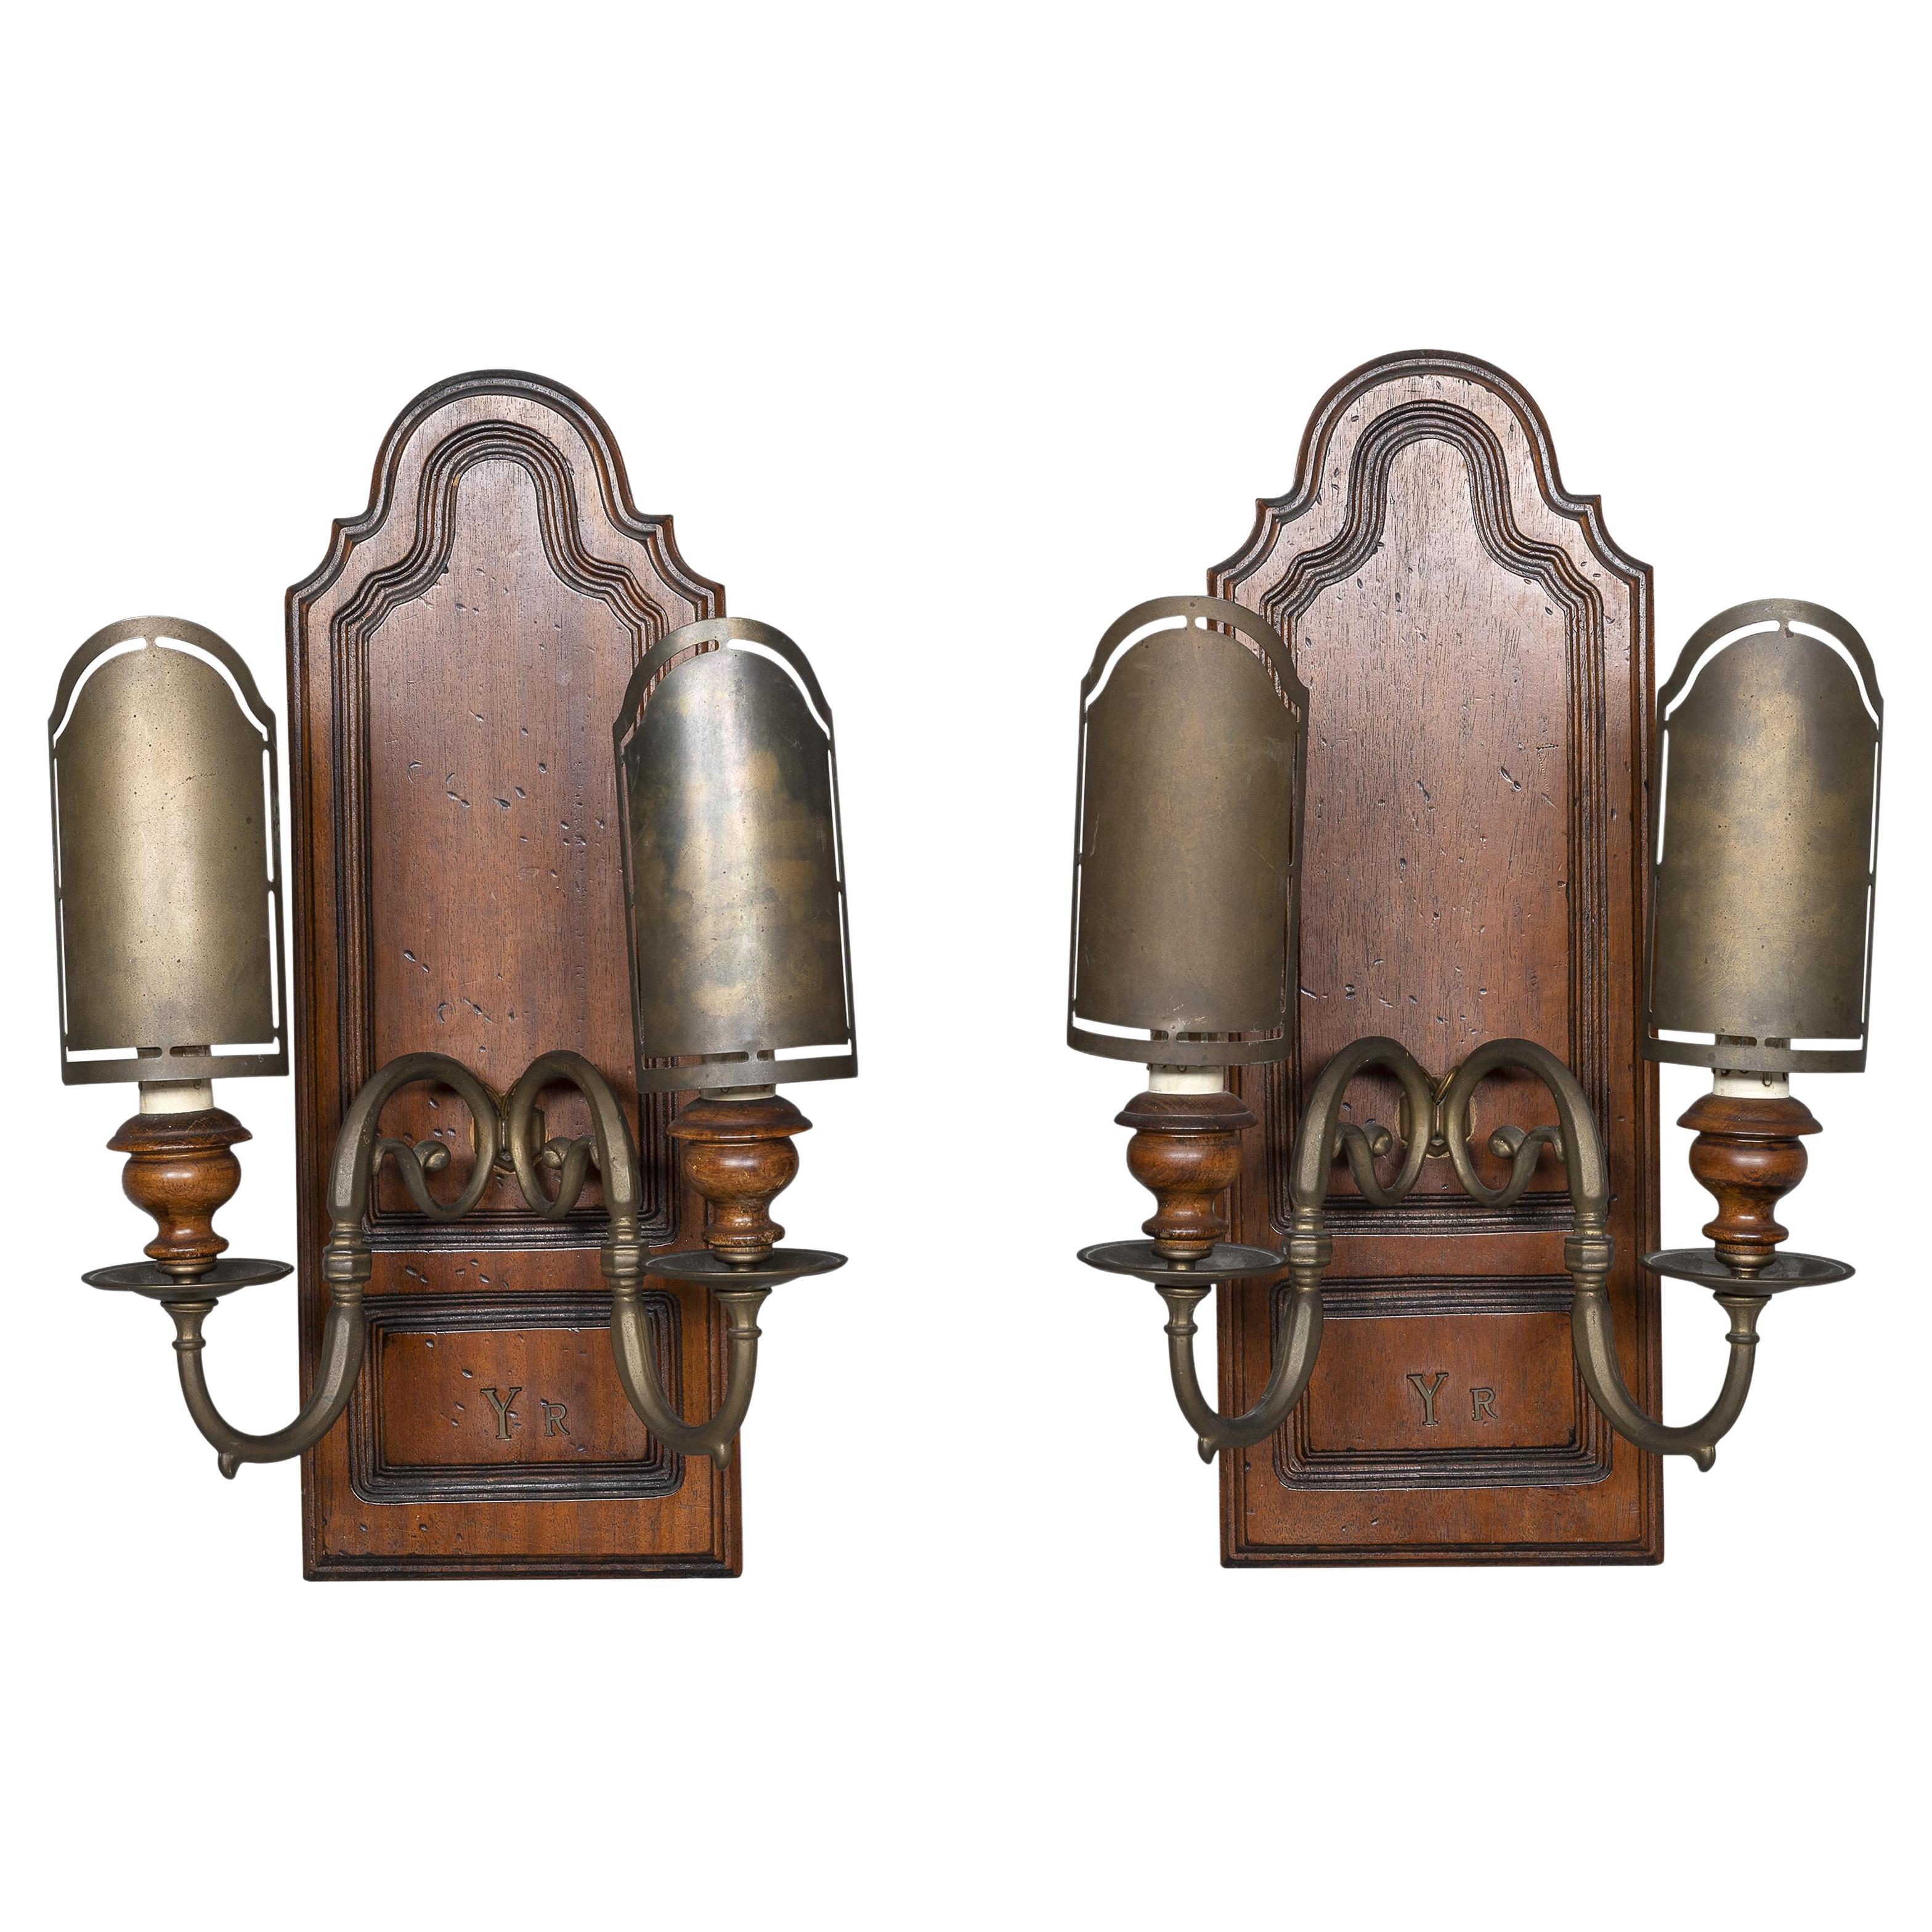 Pair of large masculine Art Nouveau Bronze and Wood Wall Plaque Sconces For Sale